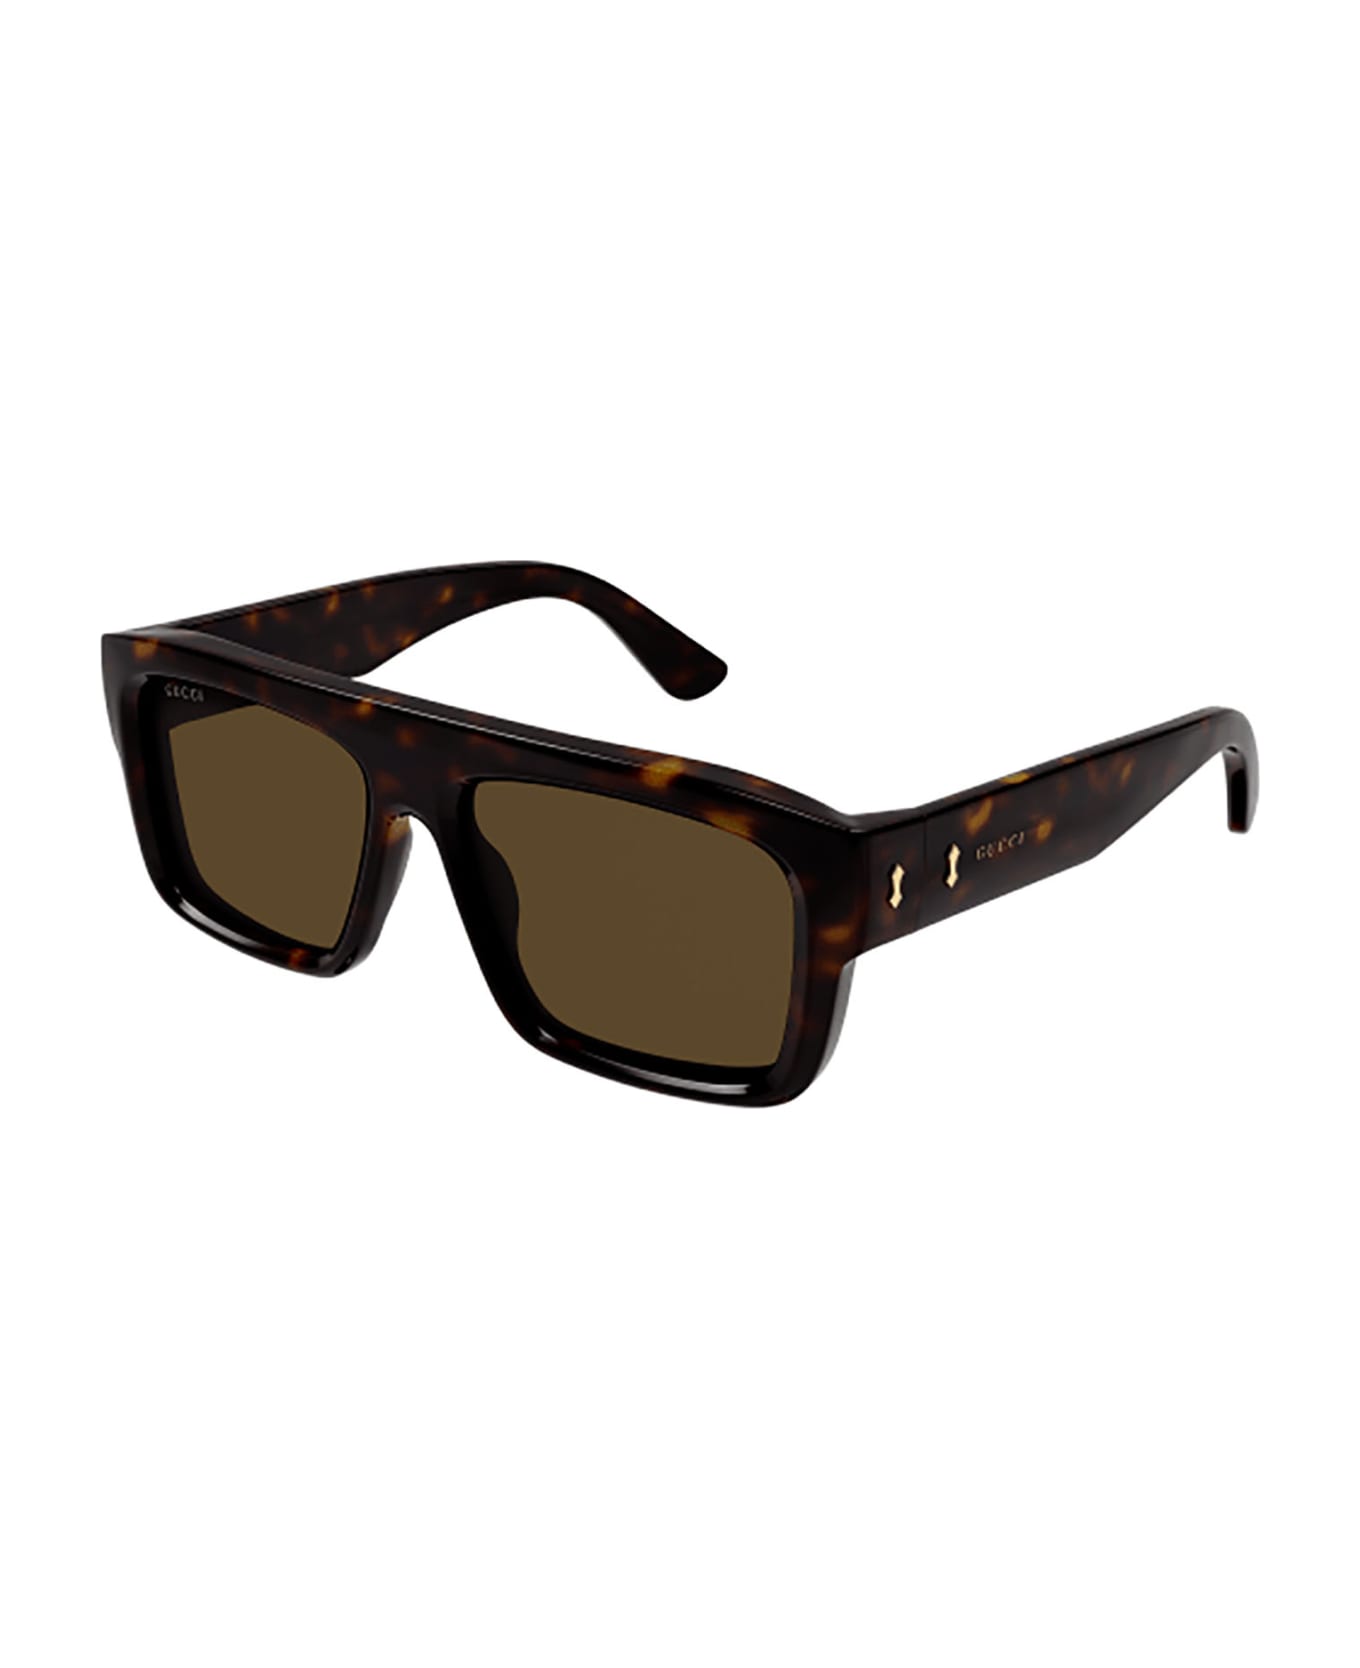 Gucci Eyewear GG1461S Sunglasses - Havana Havana Brown